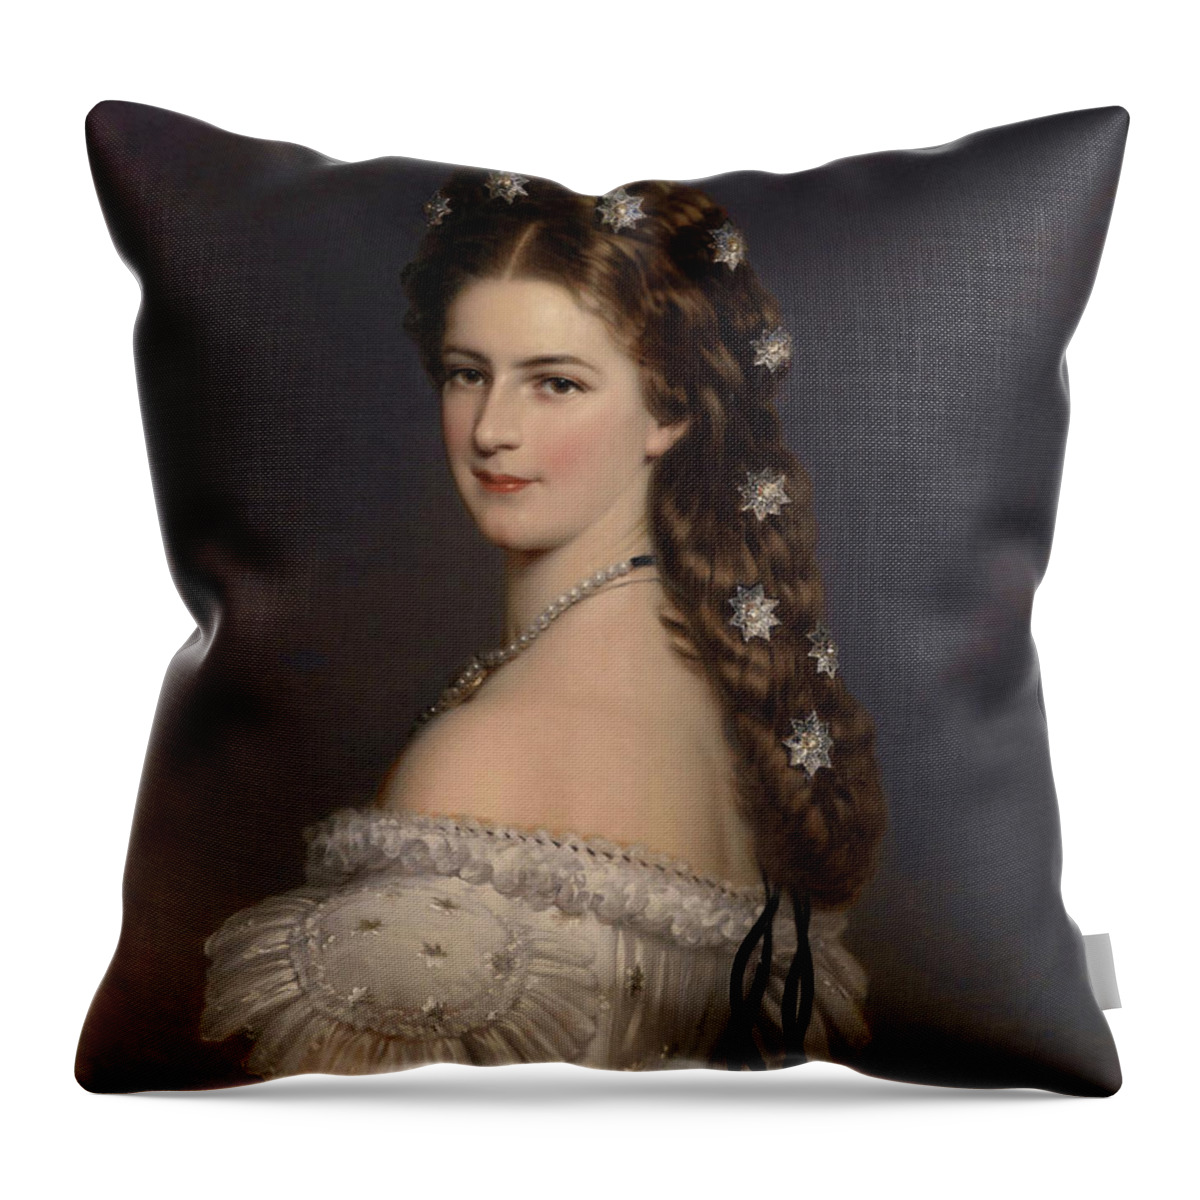 Empress Elisabeth Of Austria Throw Pillow featuring the painting Empress Elisabeth of Austria by Franz Xaver Winterhalter by Rolando Burbon